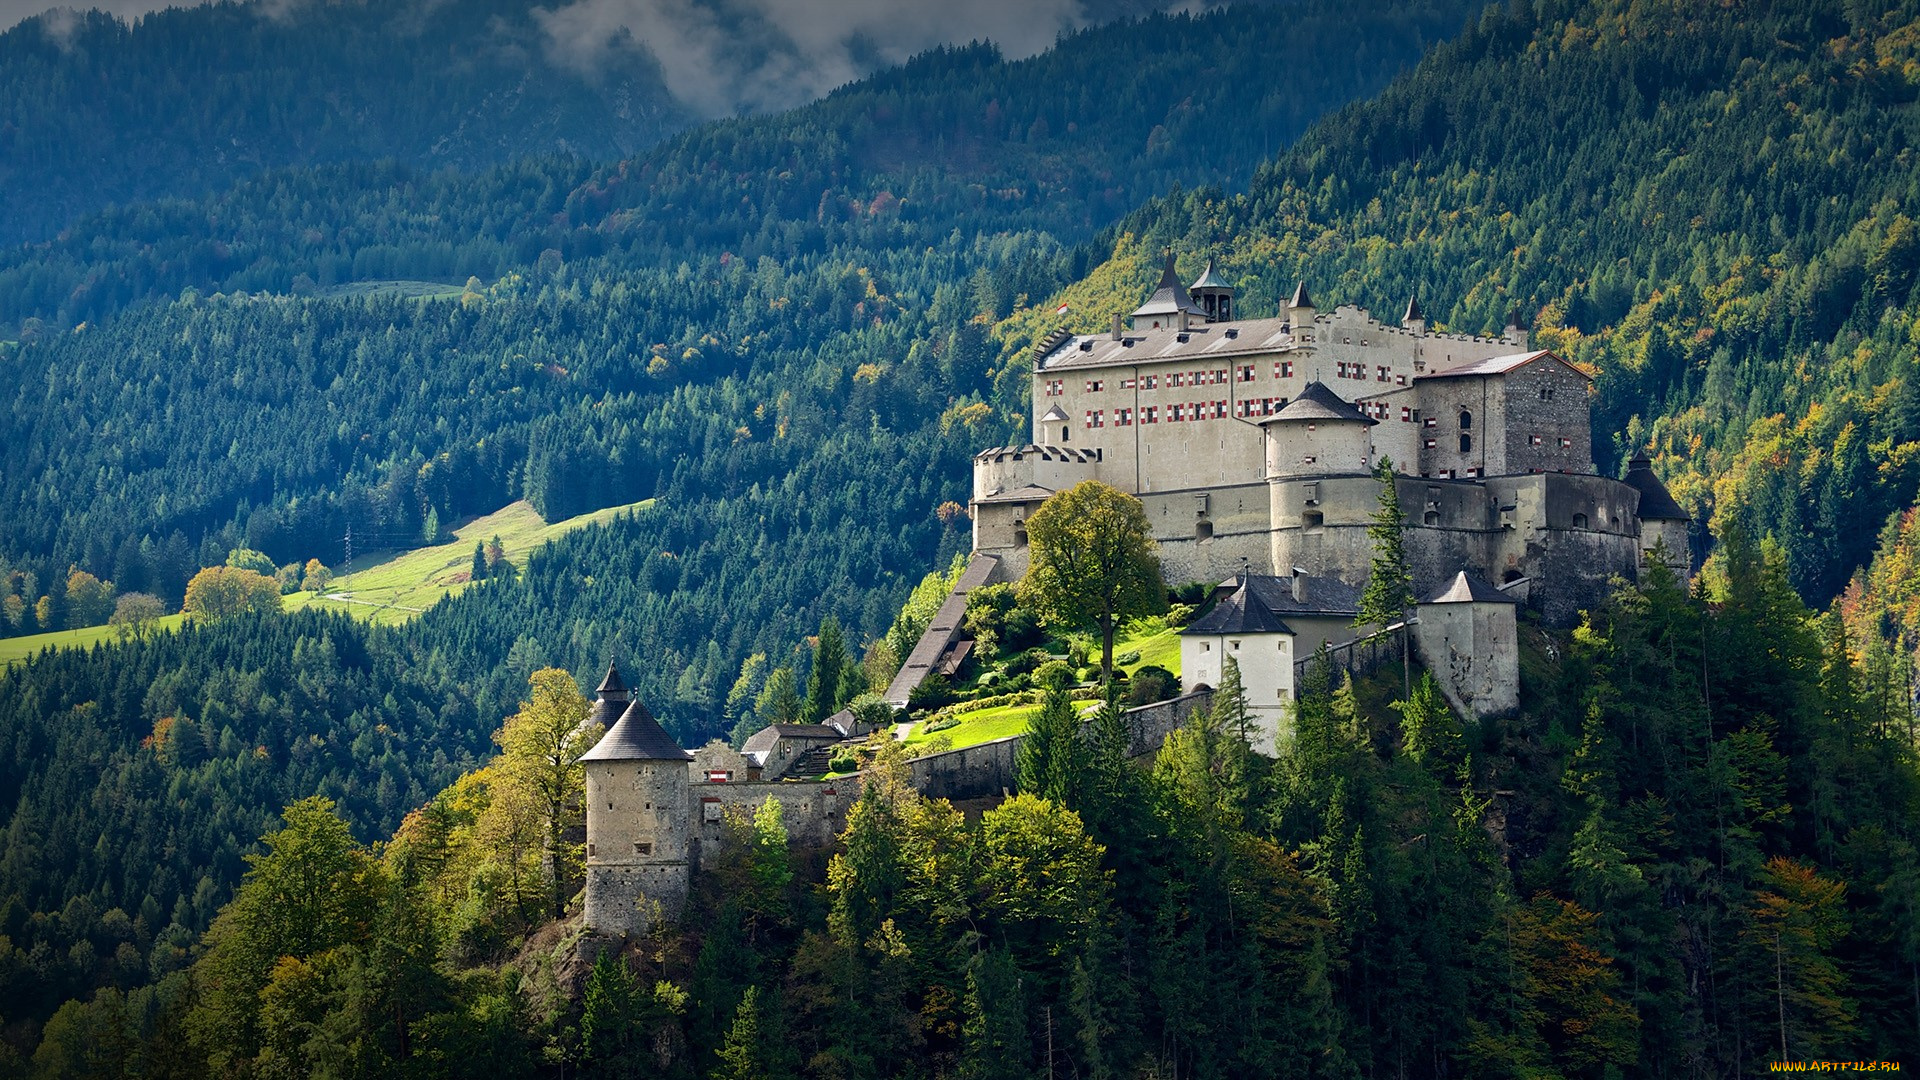 хоэнверфен, , австрия, города, -, дворцы, , замки, , крепости, природа, пейзаж, деревья, лес, туман, облака, замок, австрия, архитектура, зальцбург, hohenwerfen, castle, austria, salzburg